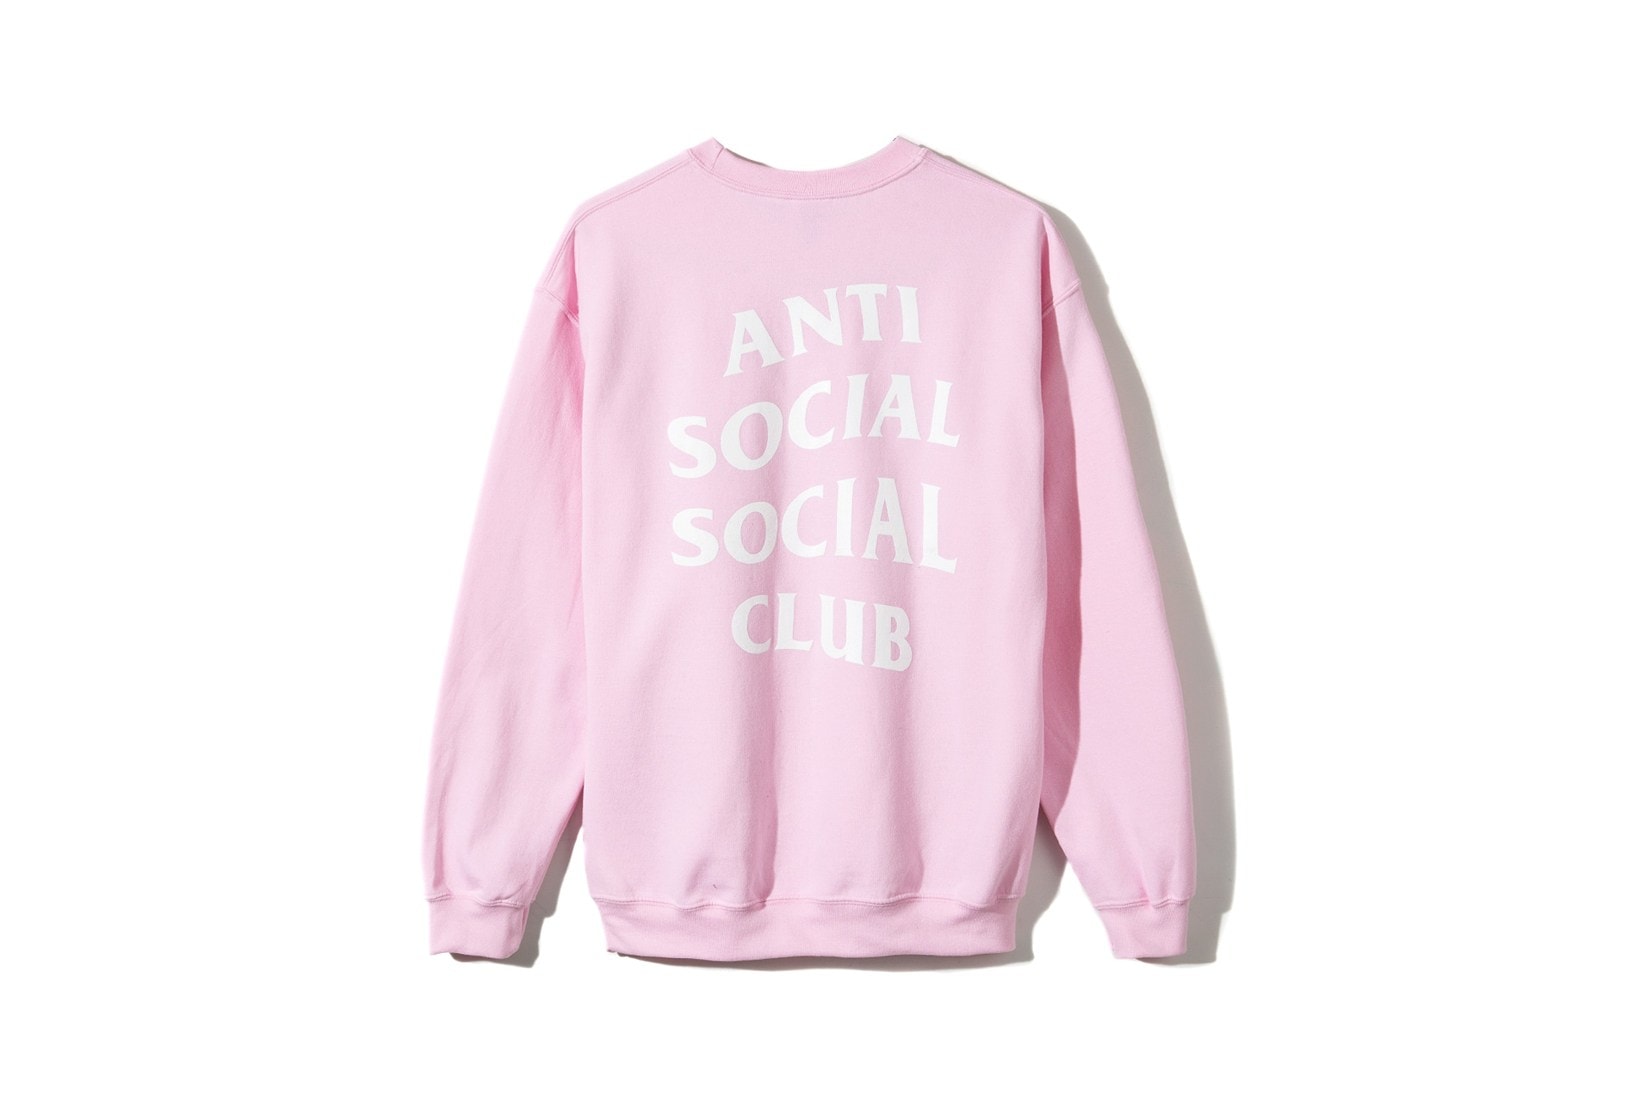 Anti Social Social Club 2016 Fall/Winter Collection